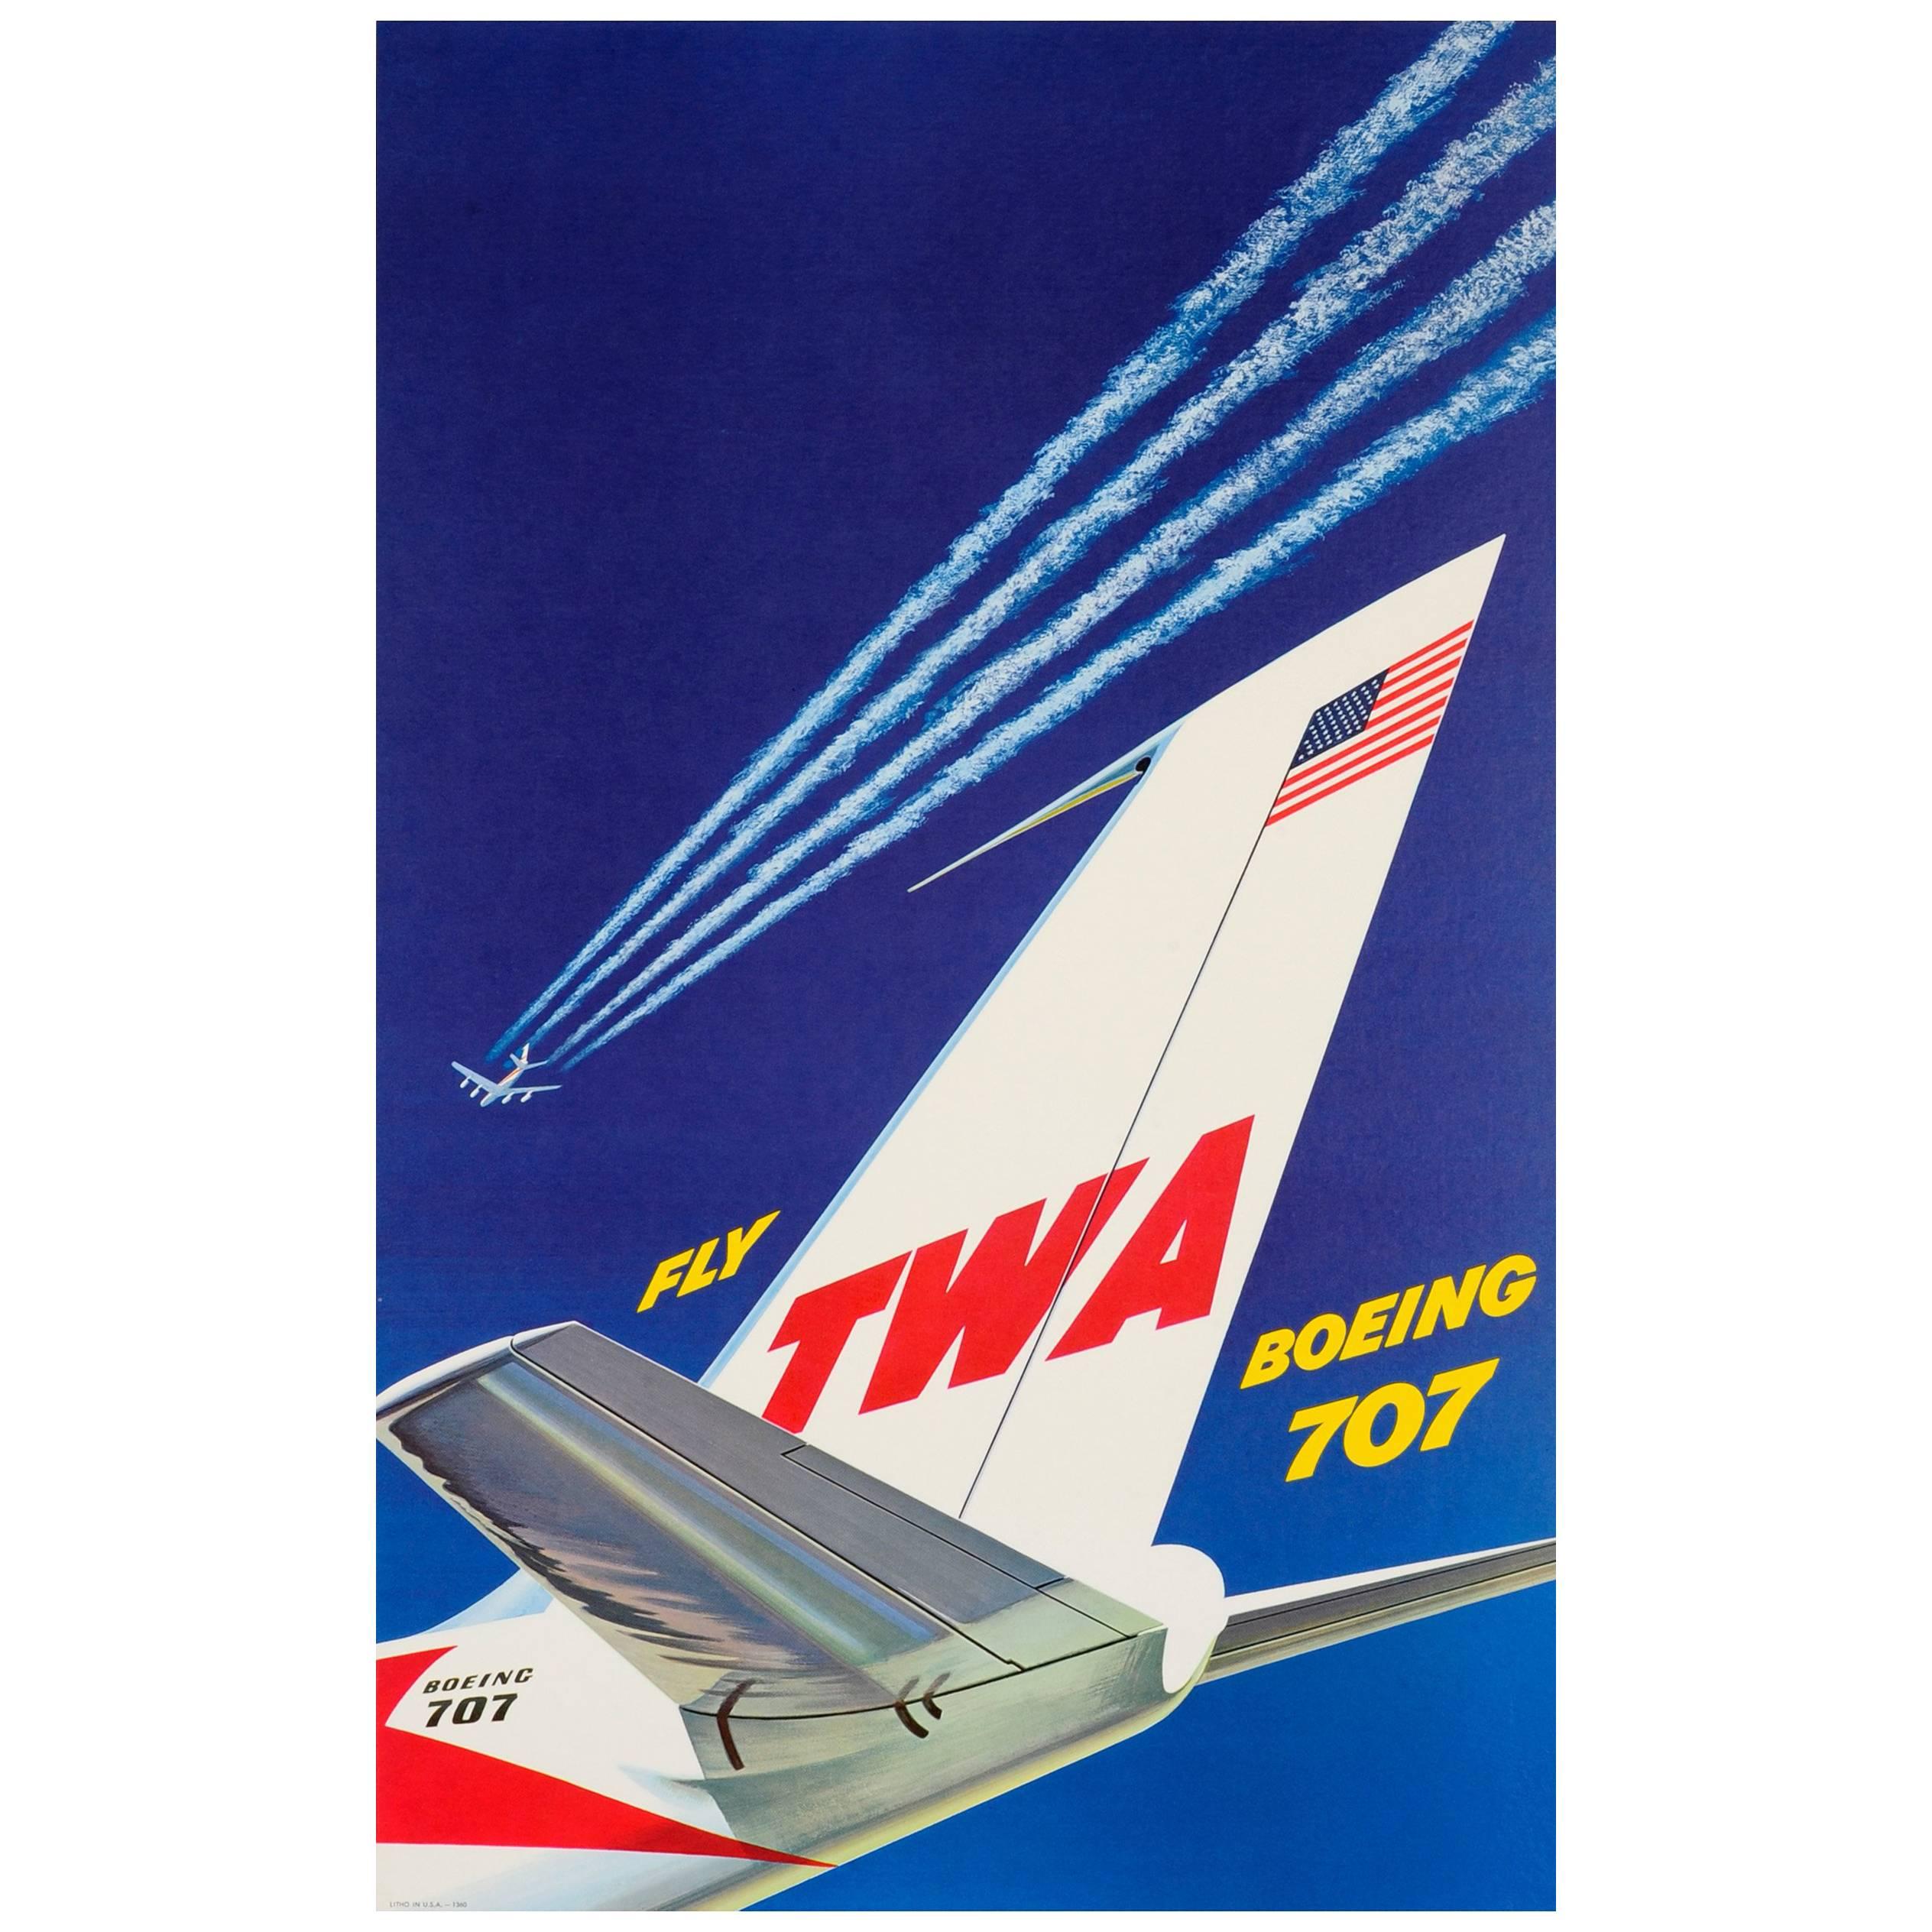 Original Vintage Trans World Airlines Jetliner Travel Poster Fly TWA Boeing 707